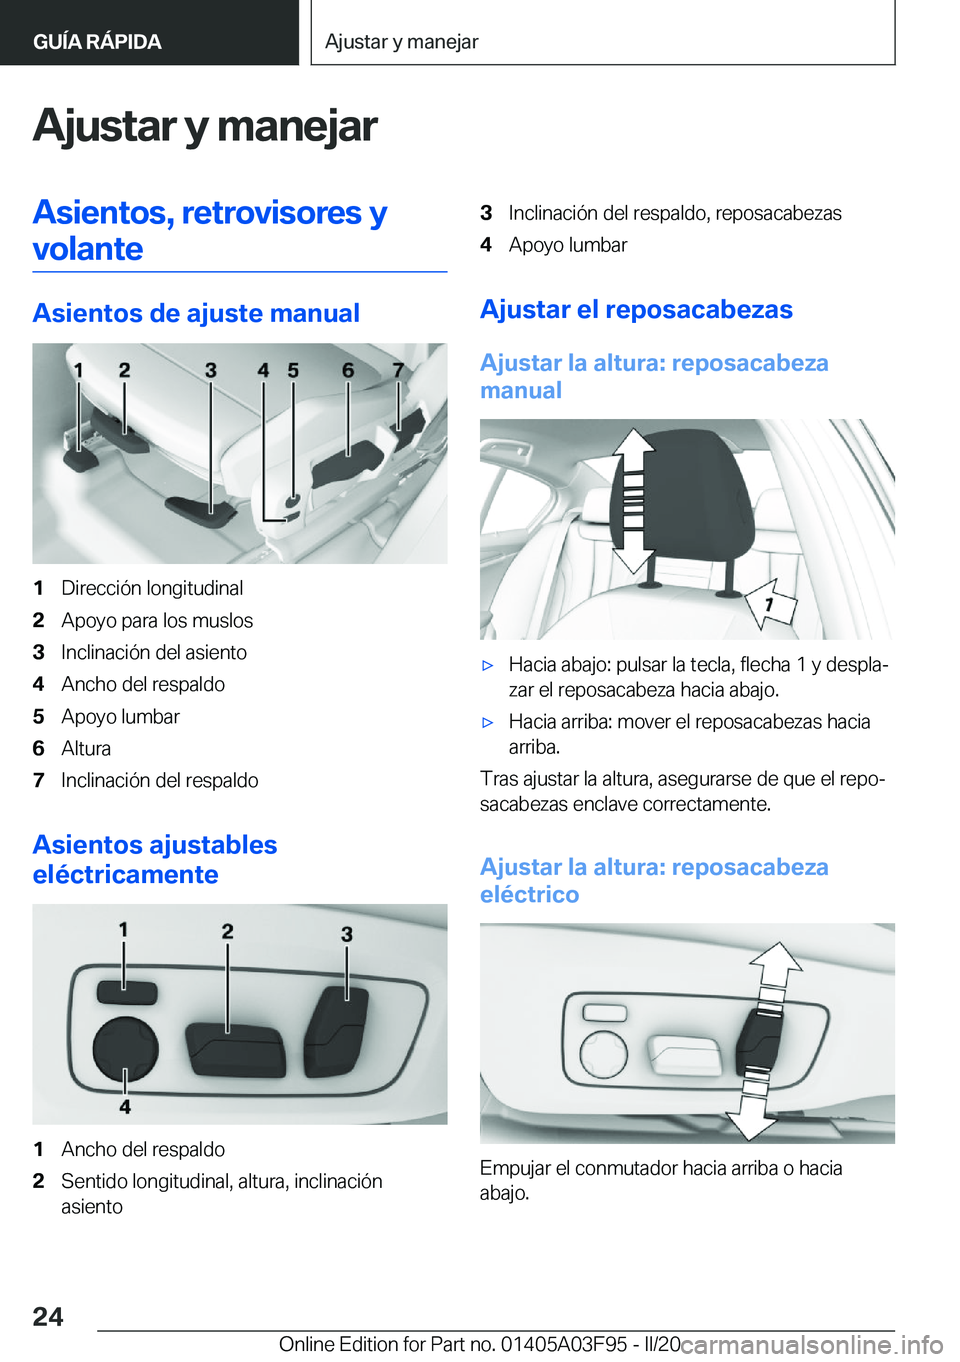 BMW 3 SERIES 2020  Manuales de Empleo (in Spanish) �A�j�u�s�t�a�r��y��m�a�n�e�j�a�r�A�s�i�e�n�t�o�s�,��r�e�t�r�o�v�i�s�o�r�e�s��y
�v�o�l�a�n�t�e
�A�s�i�e�n�t�o�s��d�e��a�j�u�s�t�e��m�a�n�u�a�l
�1�D�i�r�e�c�c�i�